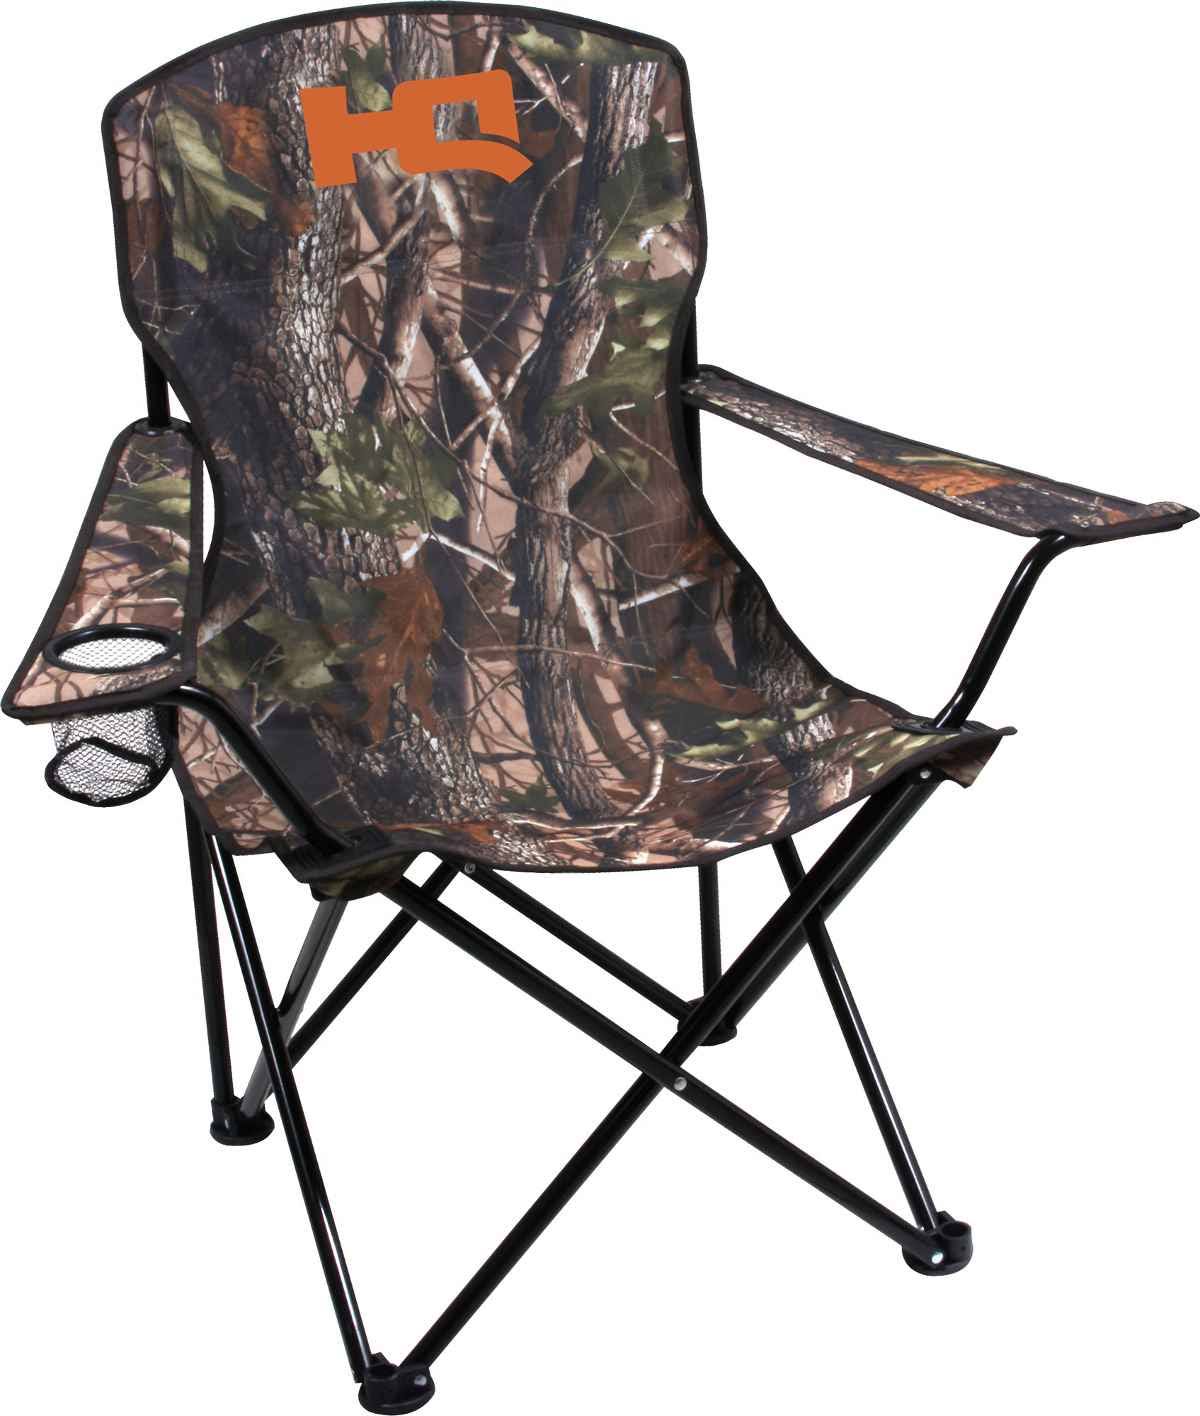 Hunters Advantage Folding Chair with Carry Bag Camo DS-2002AHA